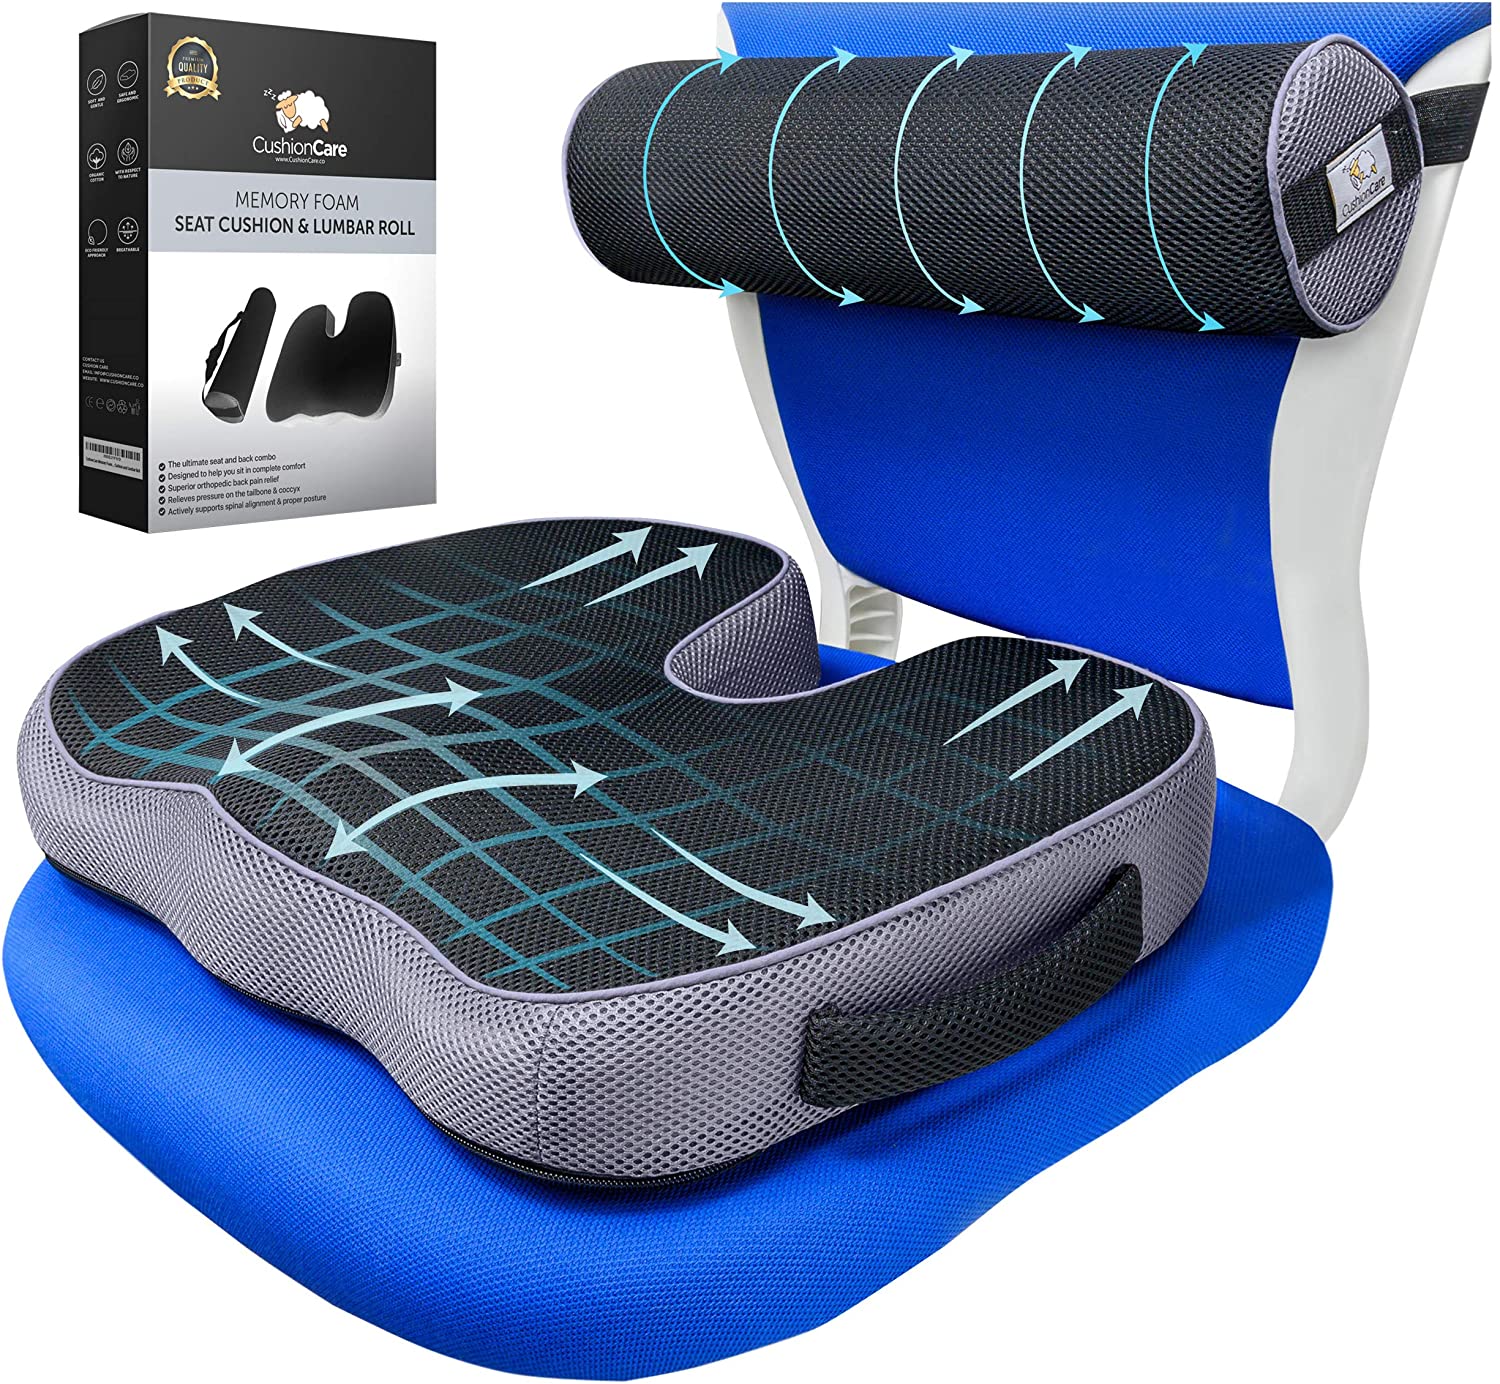 Lillyzen Donut Pillow for Tailbone Pain Relief Memory Foam Cushion  Orthopedic Seat Pressure Relief Sitting Coccyx Sciatica Hemorrhoid  Pregnancy